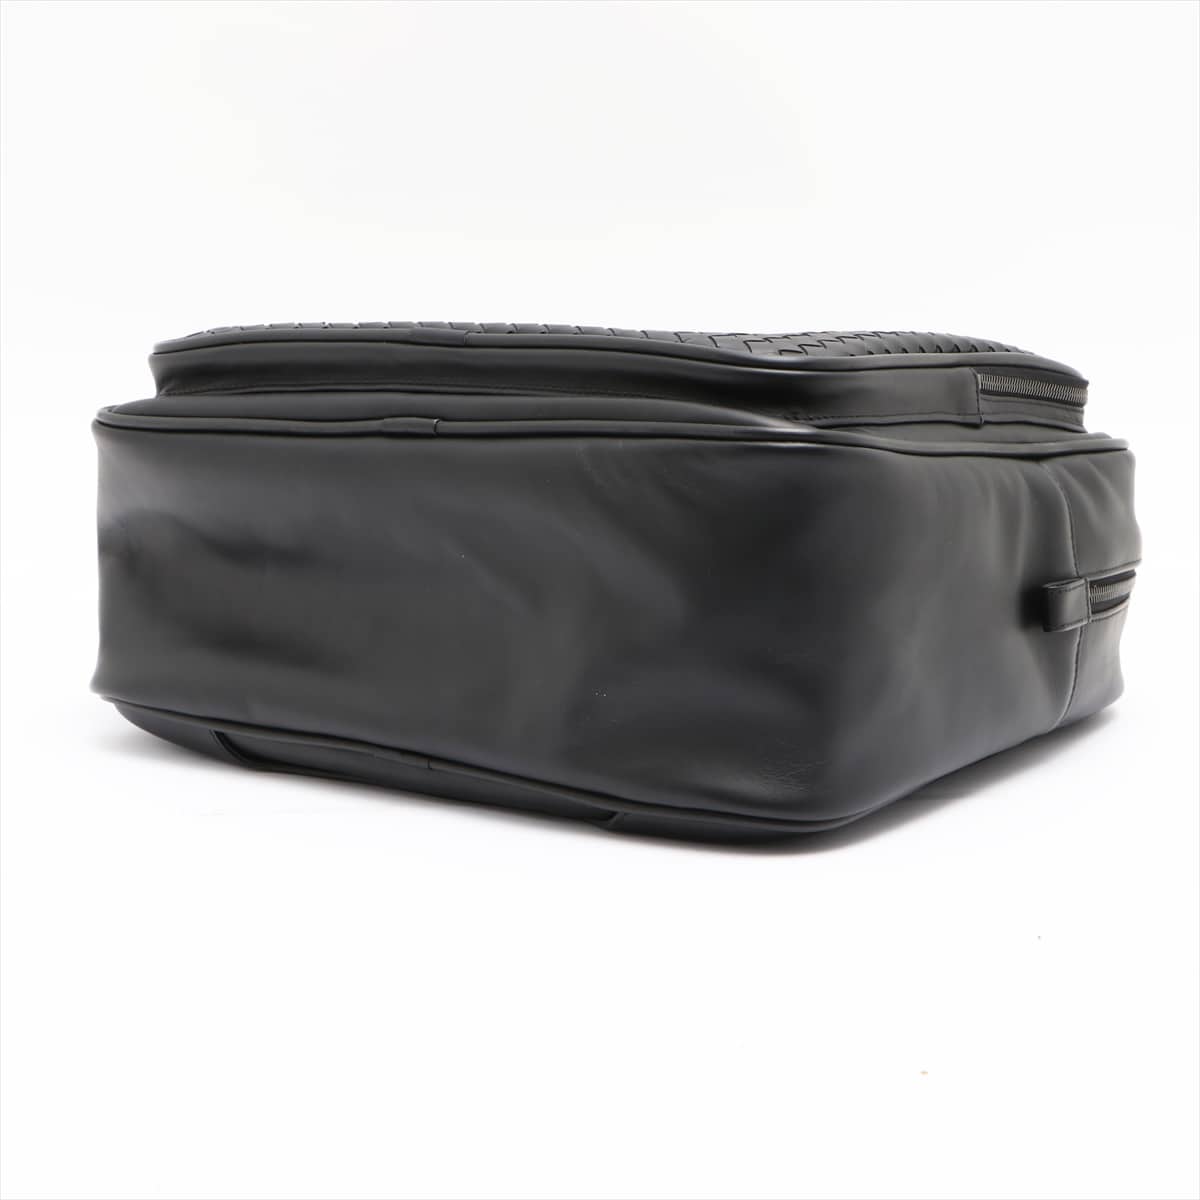 Bottega Veneta Intrecciato Leather Hand bag Black 274546